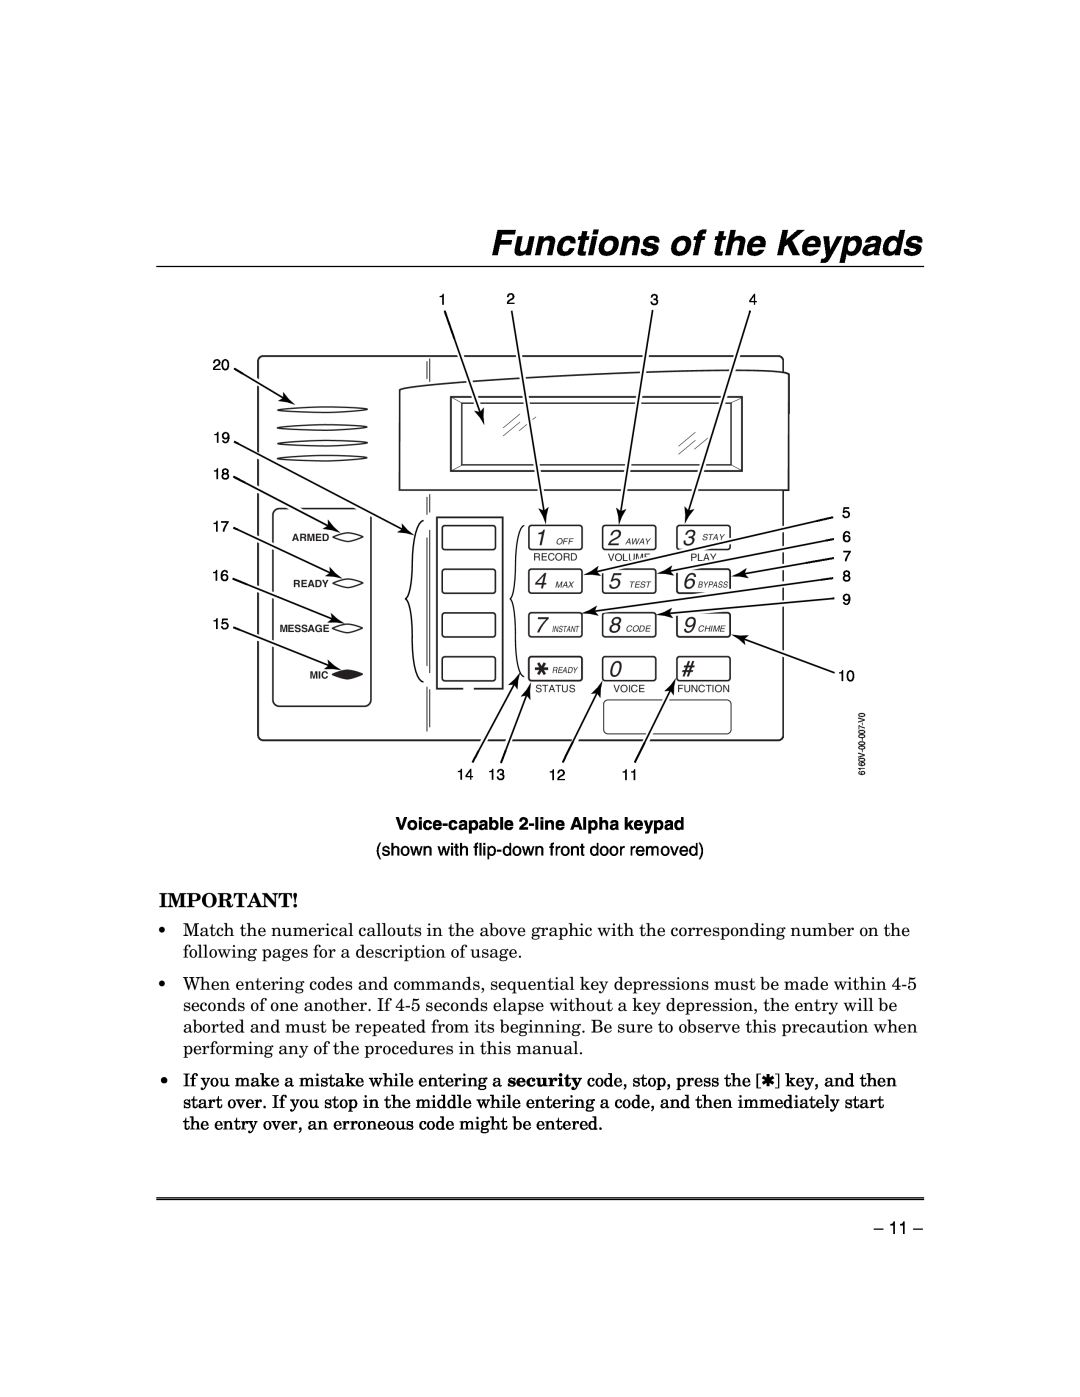 Honeywell VISTA-21IPSIA manual Functions of the Keypads 